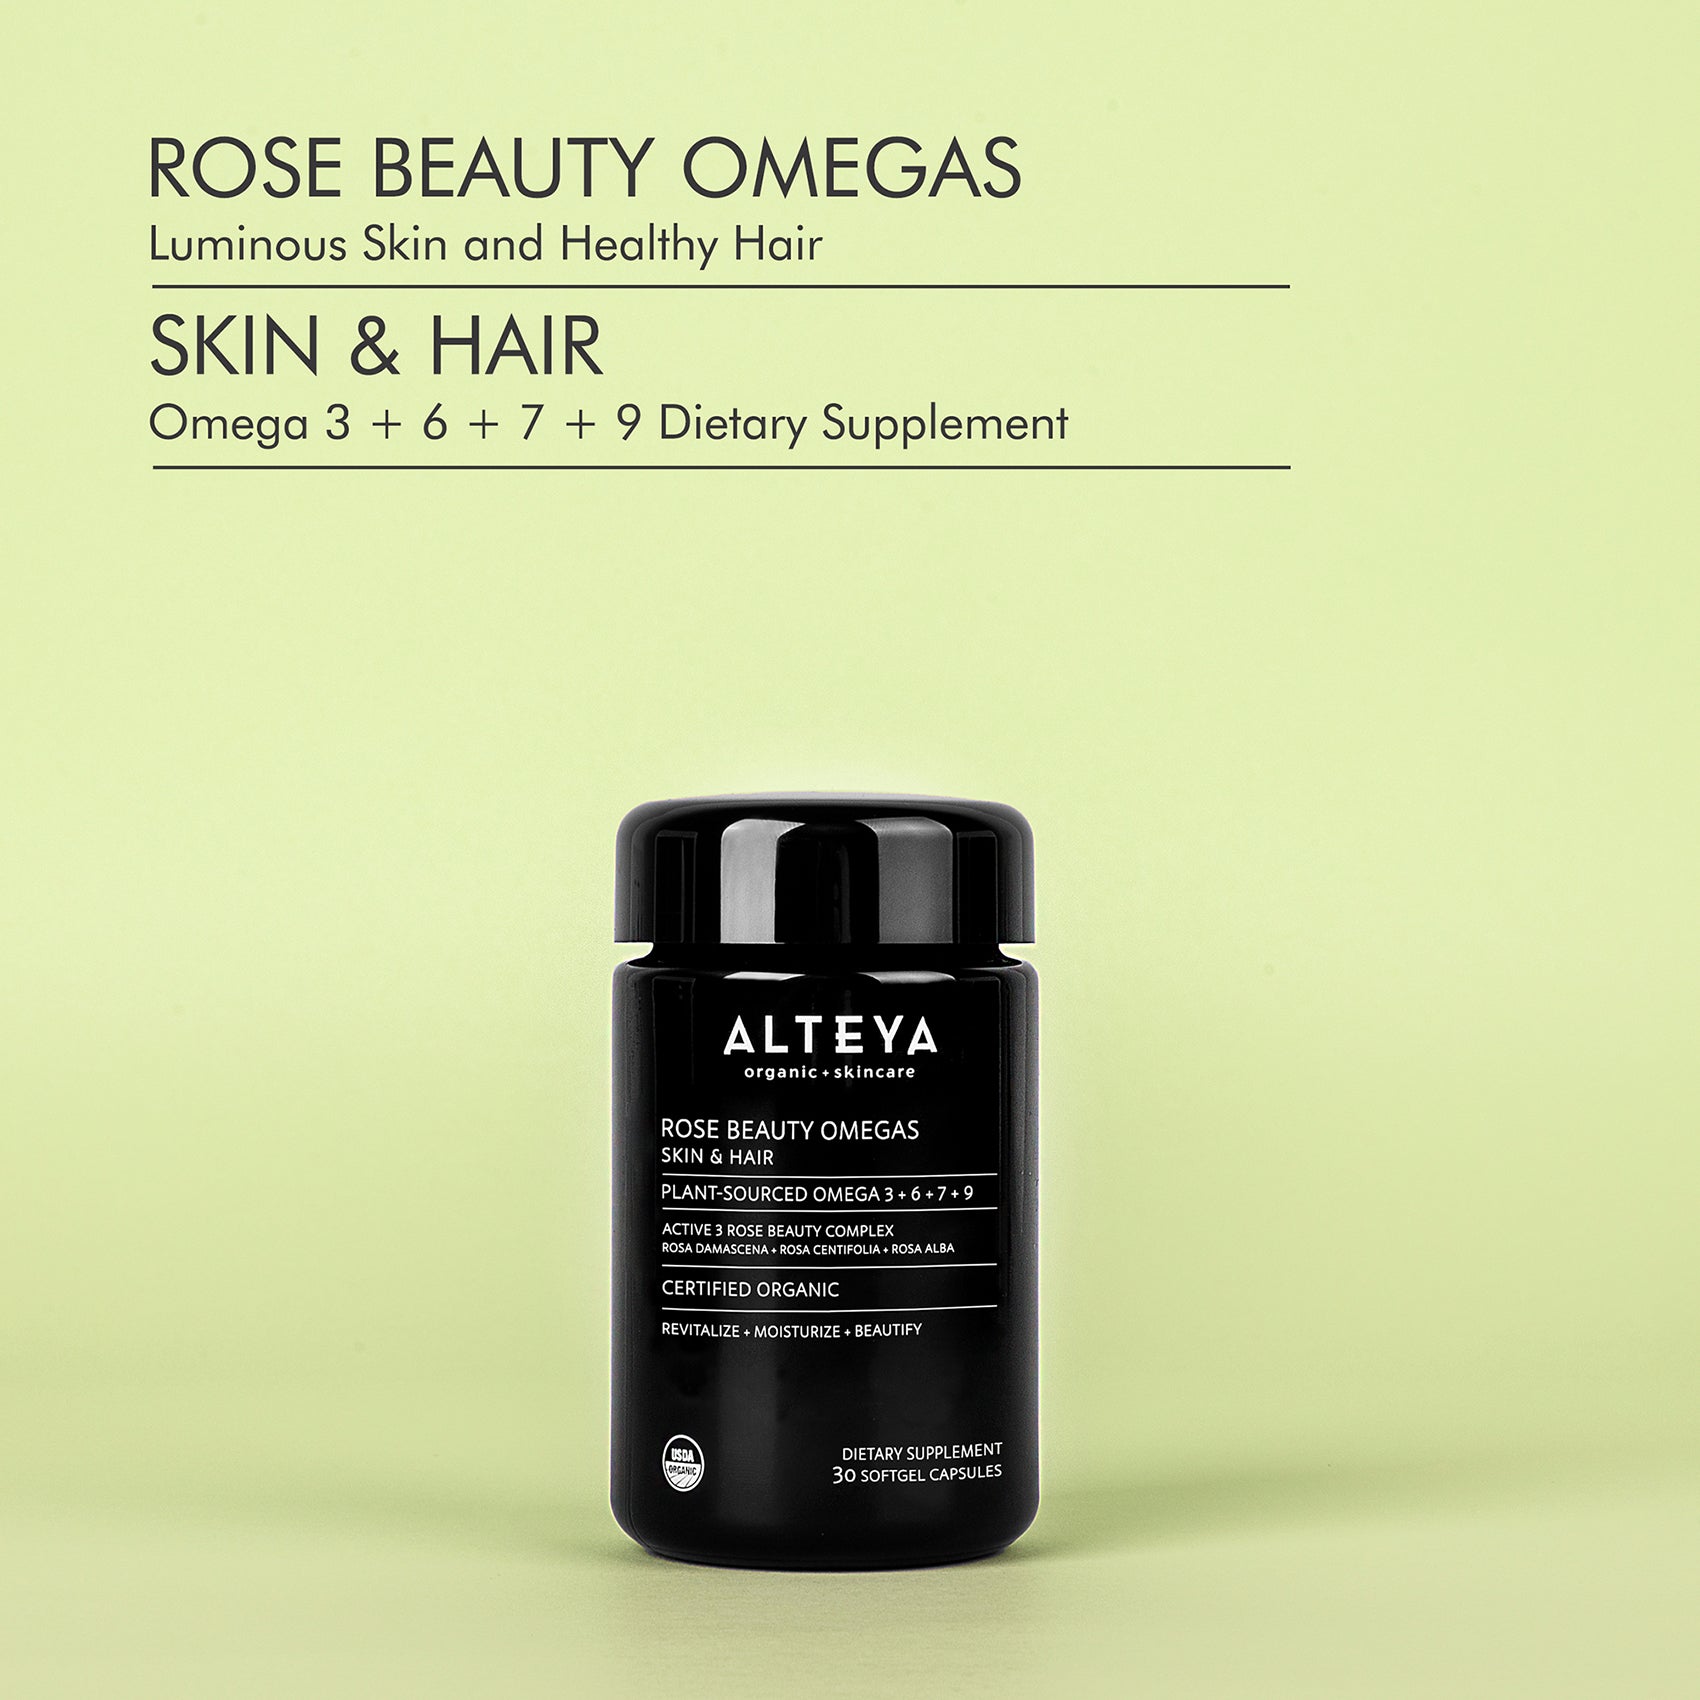 Alteya Organics' Rose Beauty Omegas - Skin & Hair Organic Supplement is designed for skin and hair nourishment.